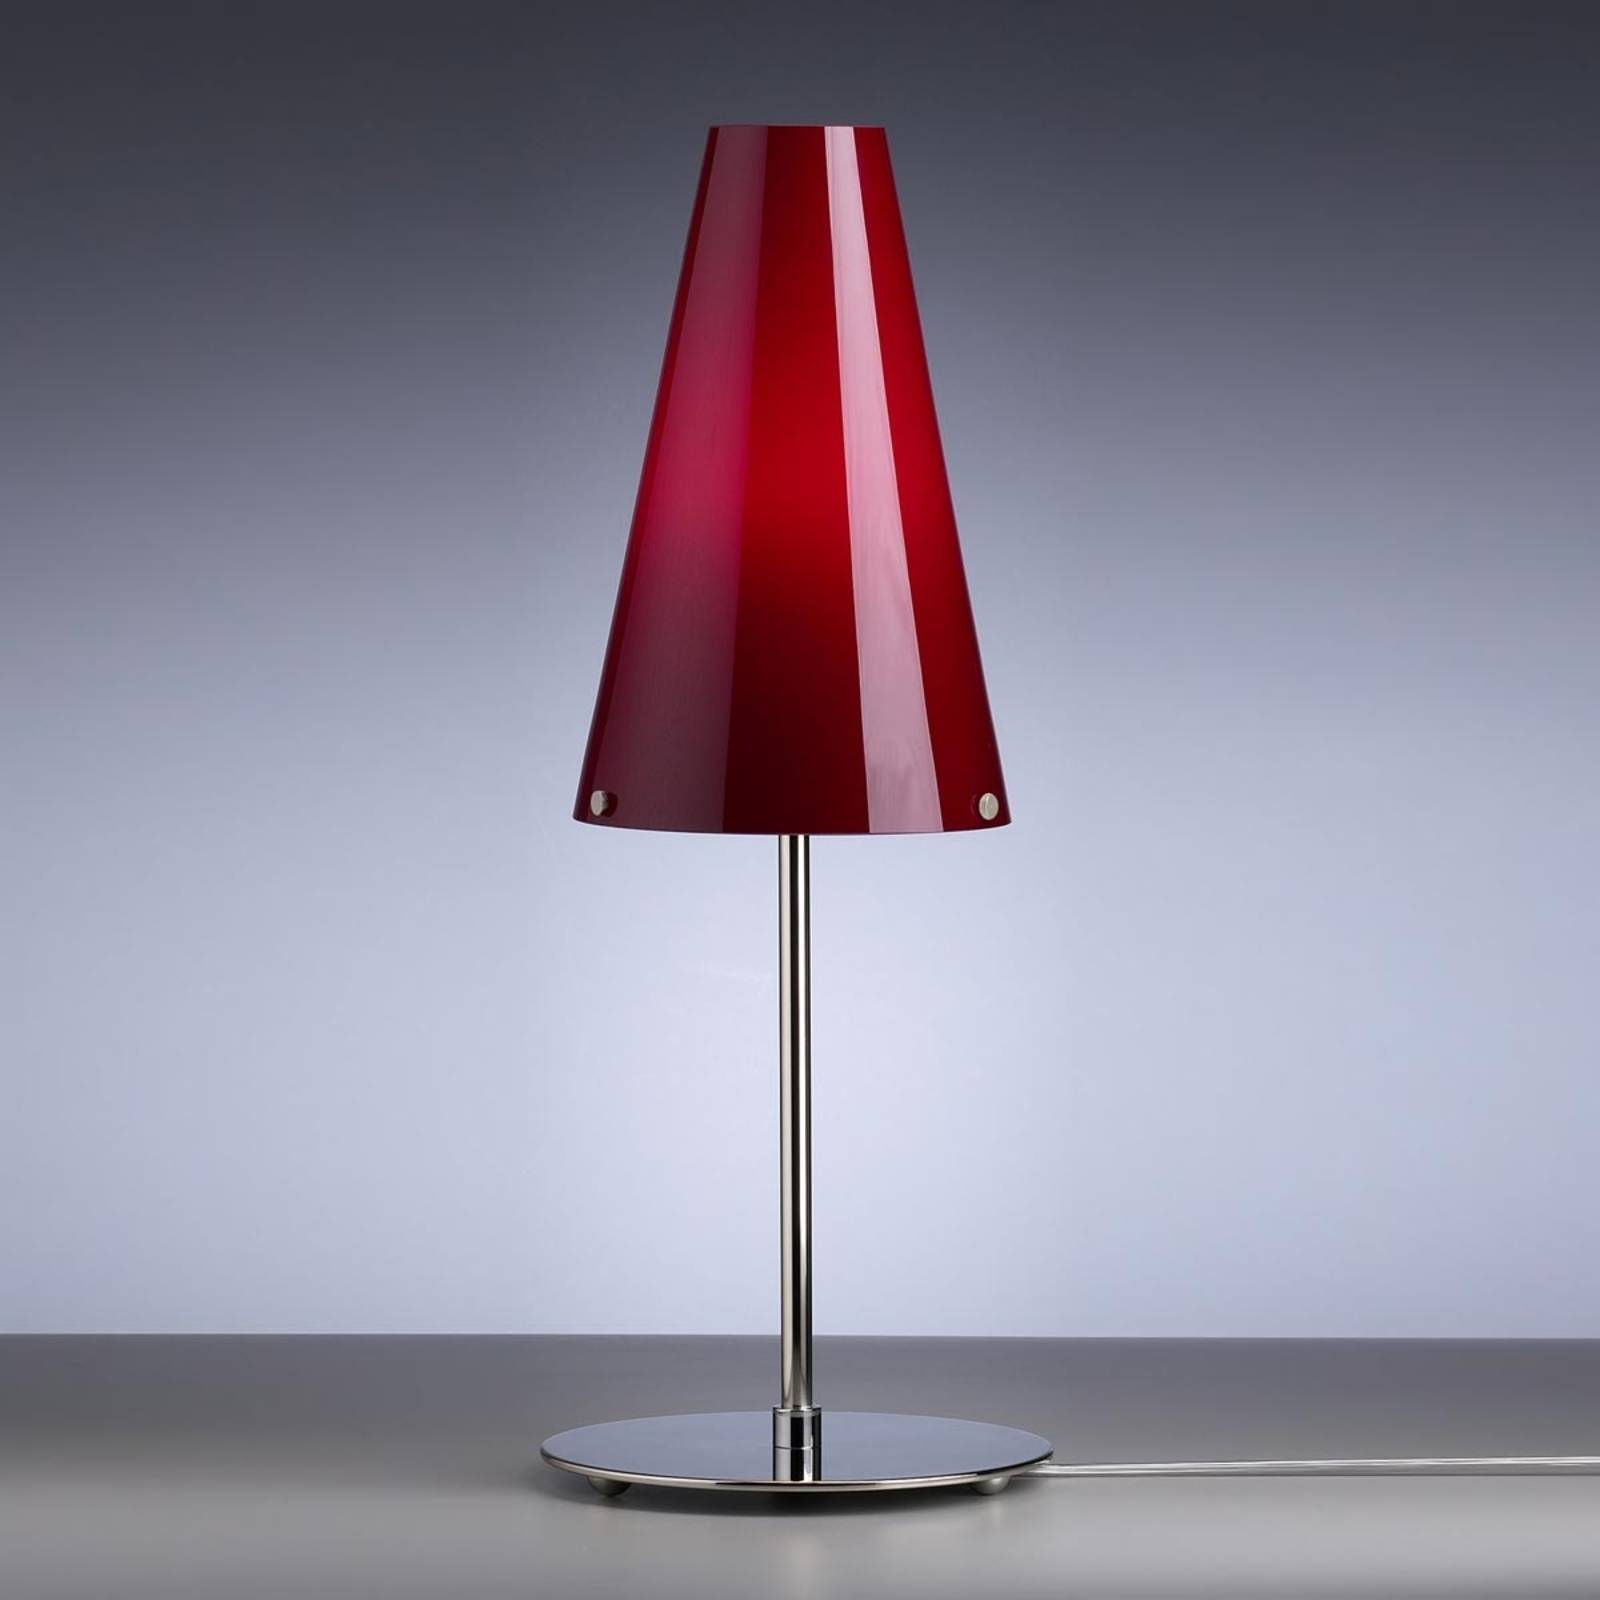 Tafellamp van Walter Schnepel, rood